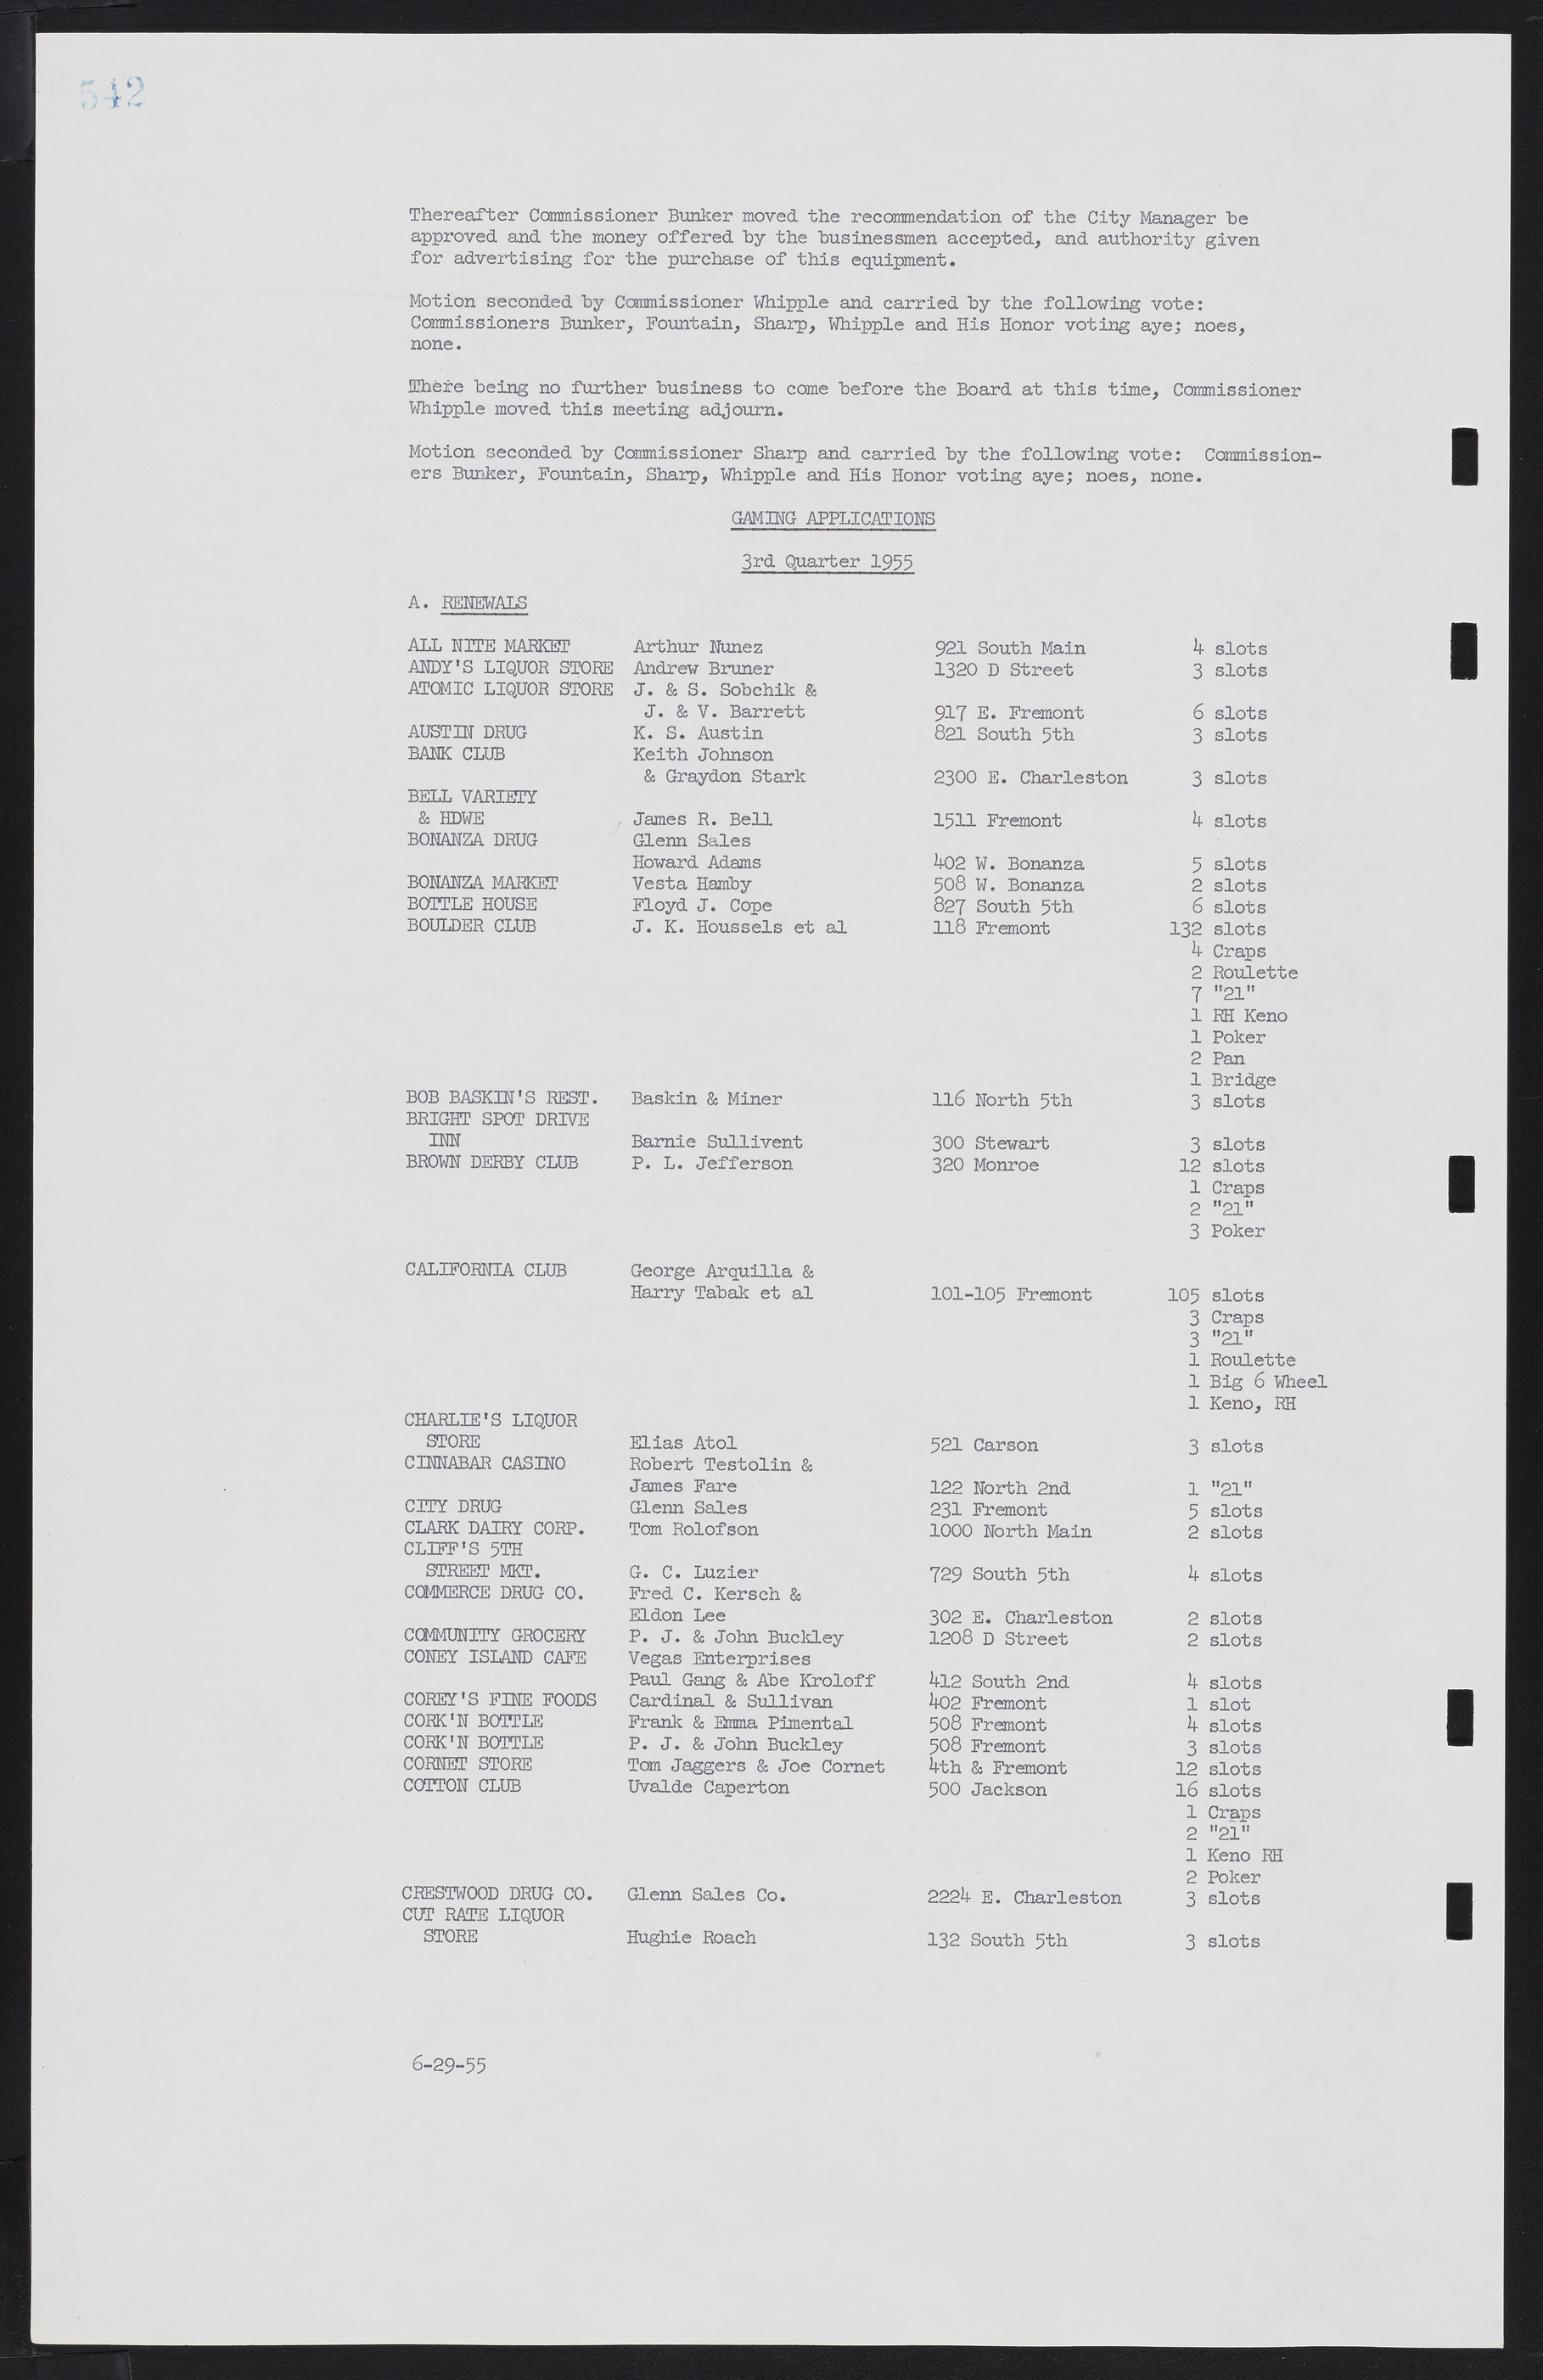 Las Vegas City Commission Minutes, February 17, 1954 to September 21, 1955, lvc000009-548